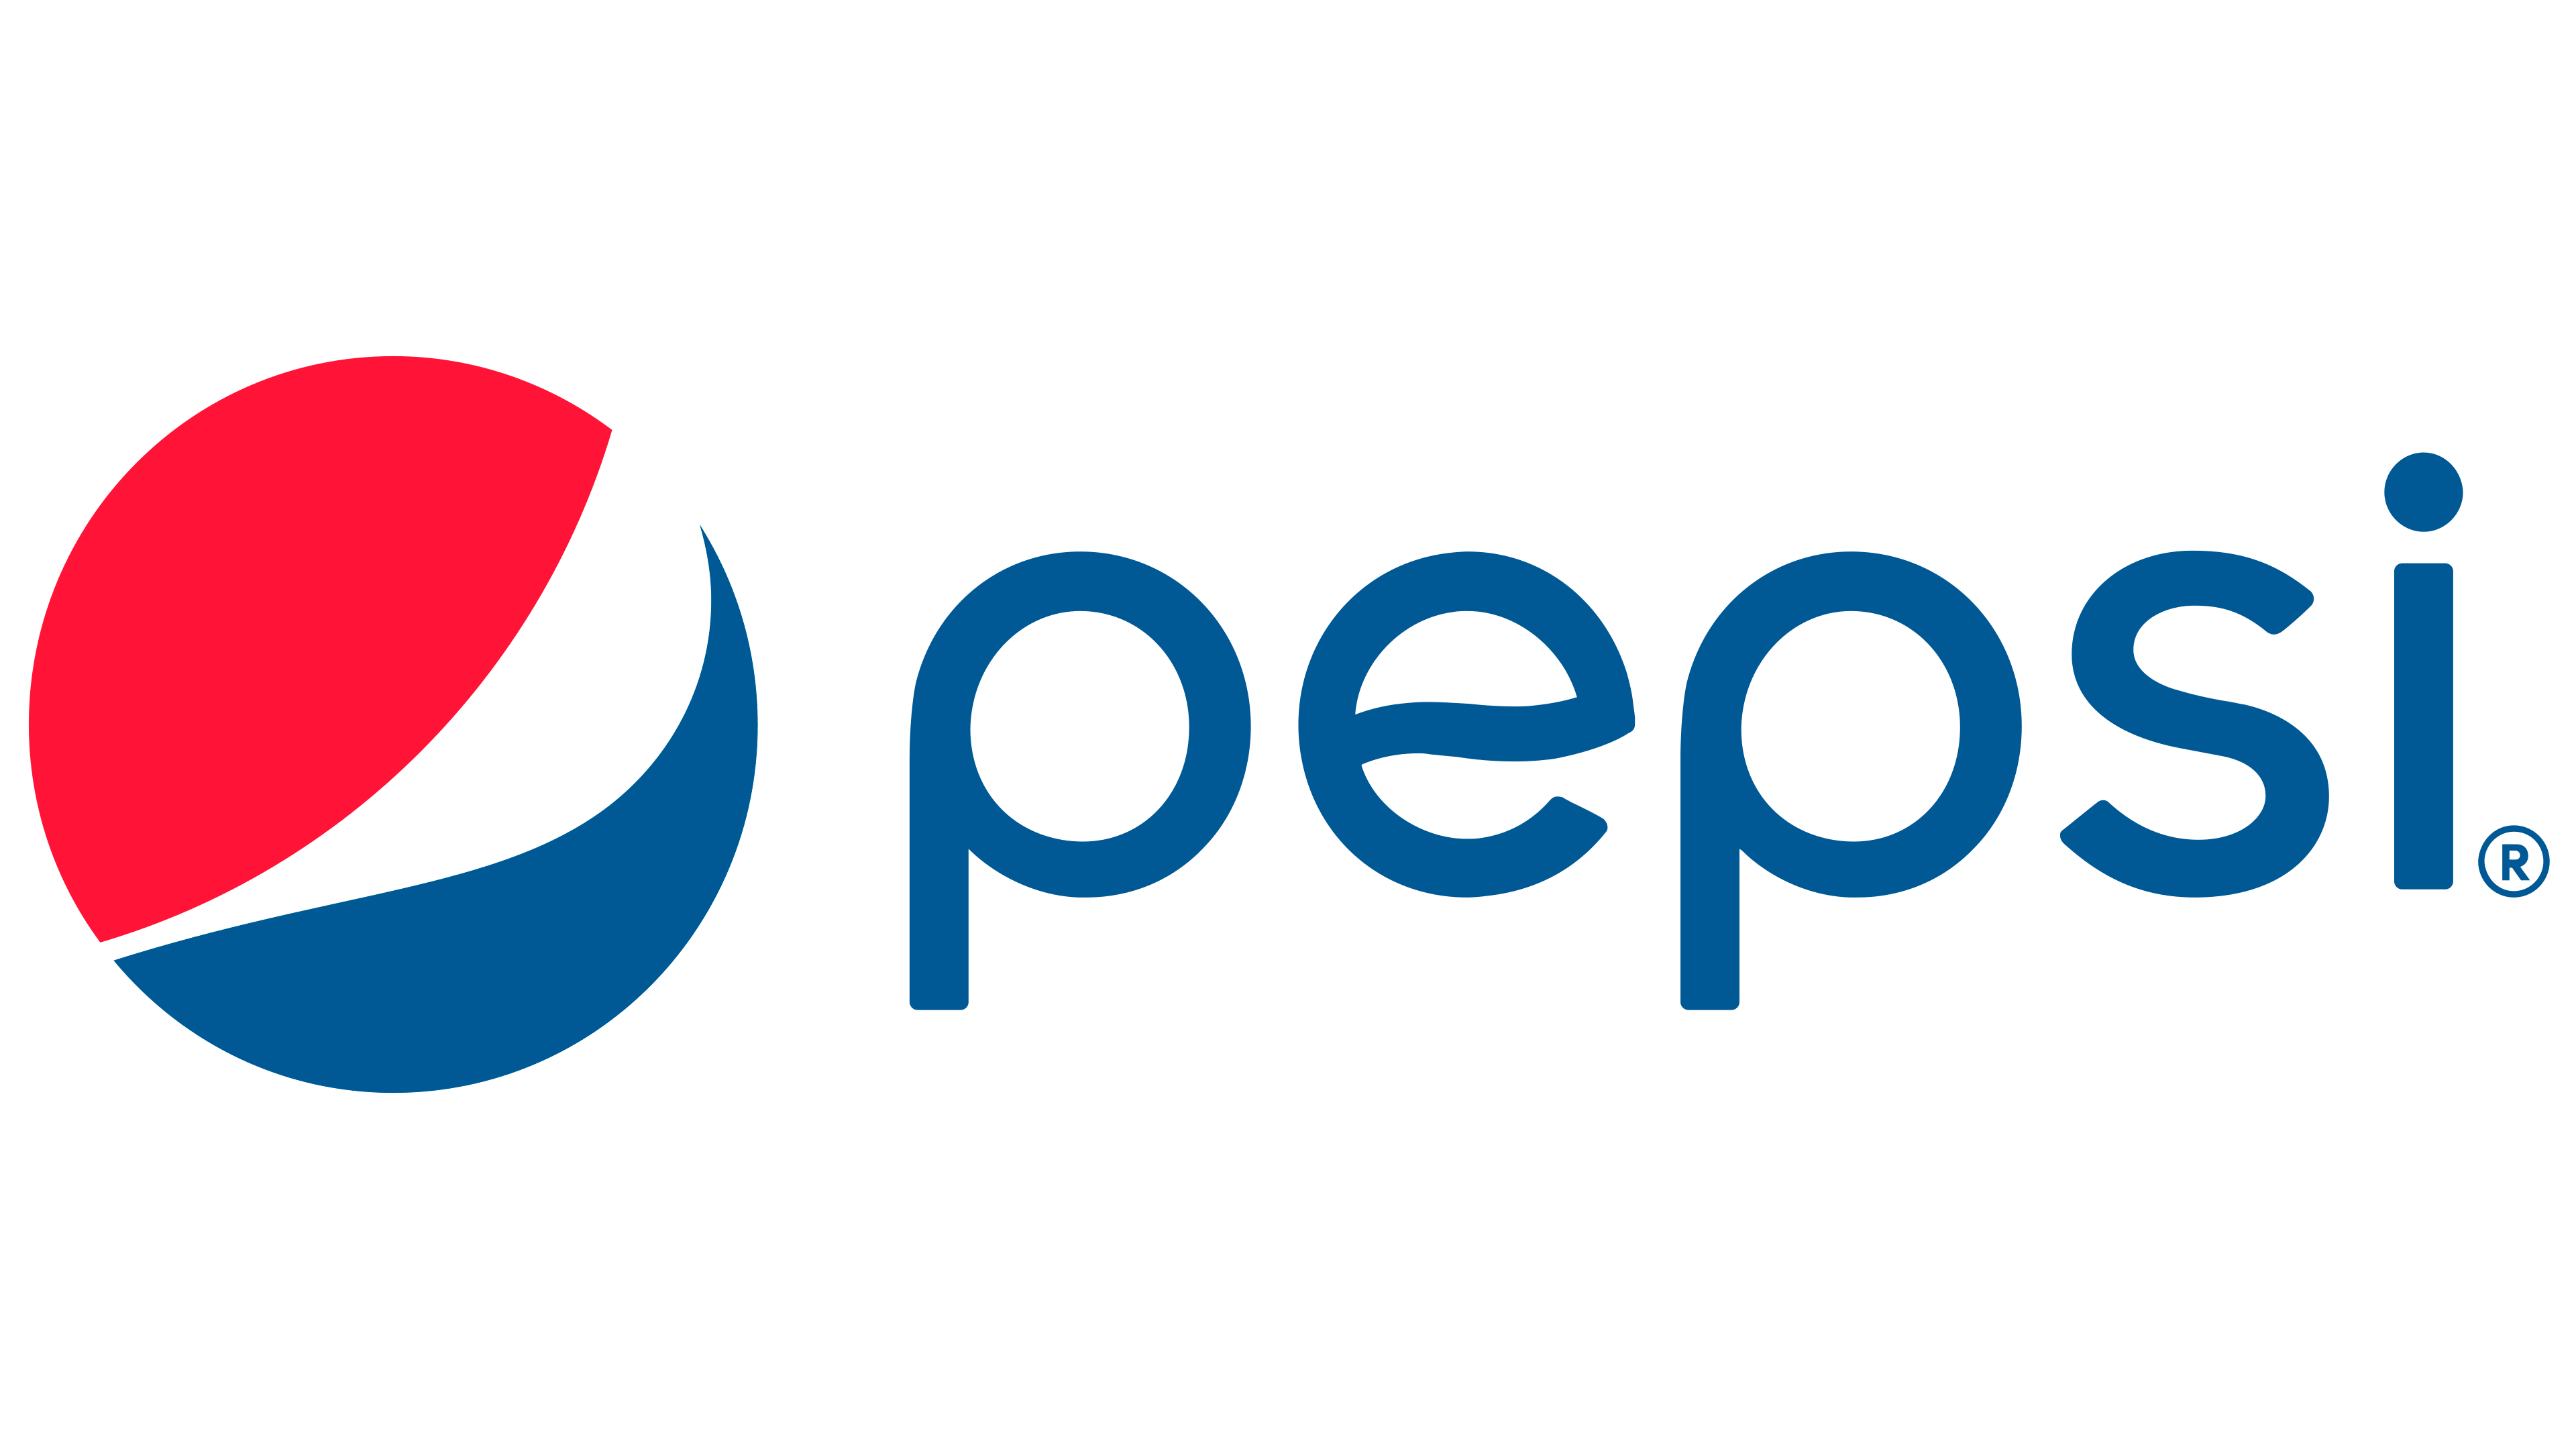 Pepsi_Logo